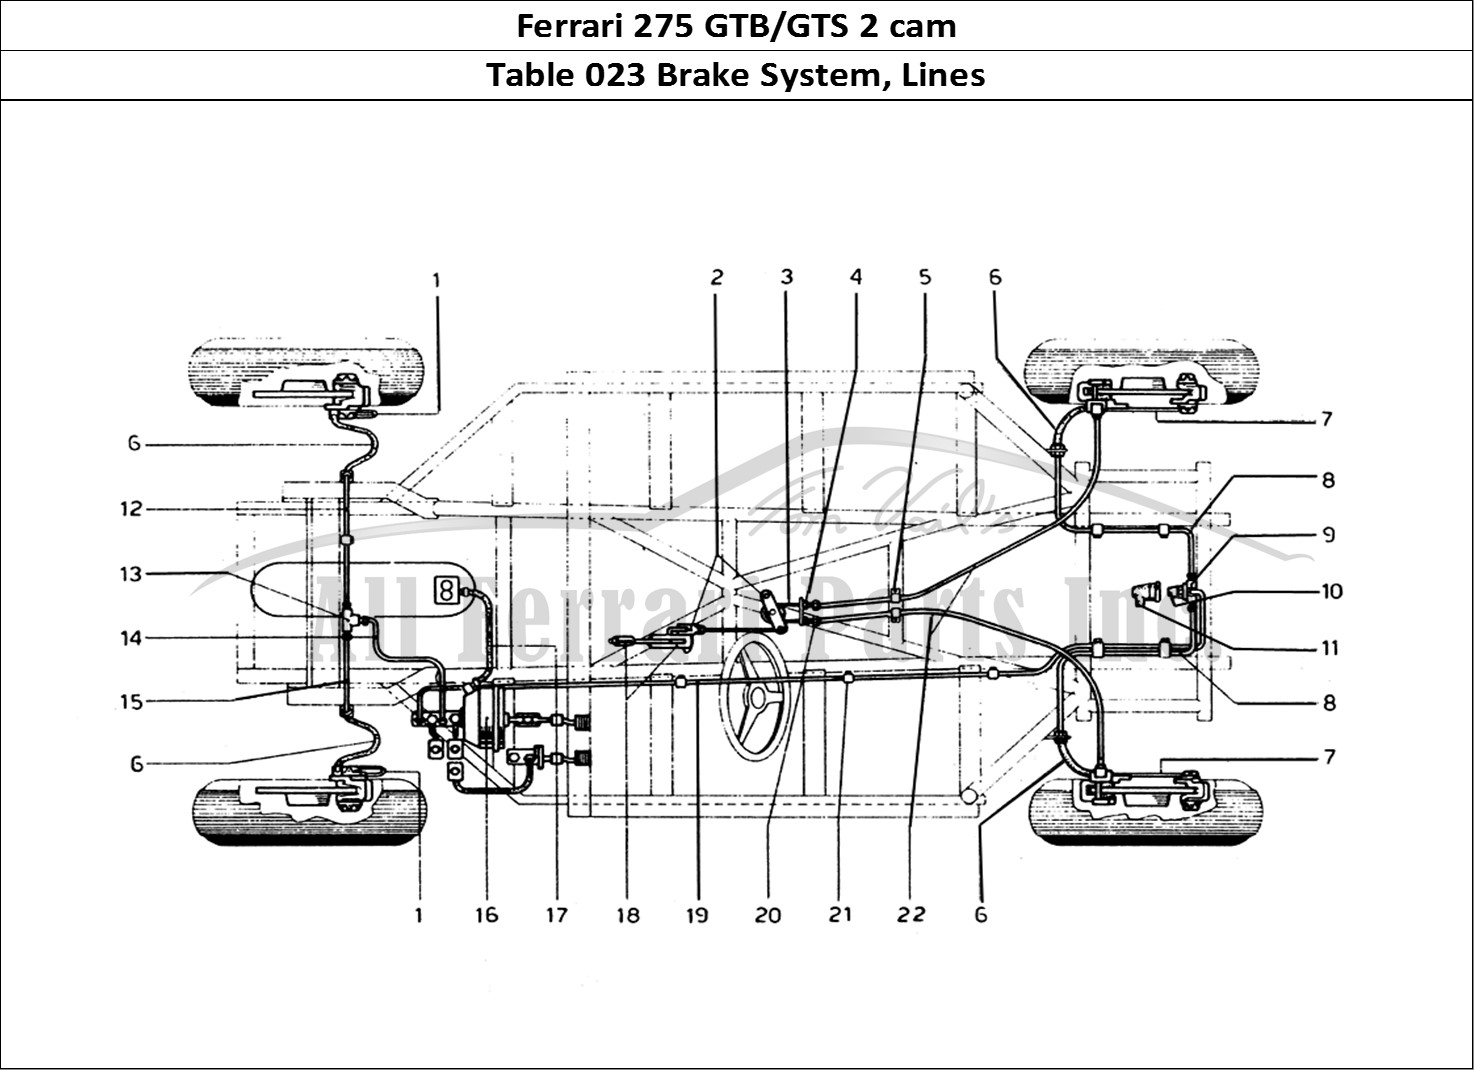 Ferrari Parts Ferrari 275 GTB/GTS 2 cam Page 023 Brake System